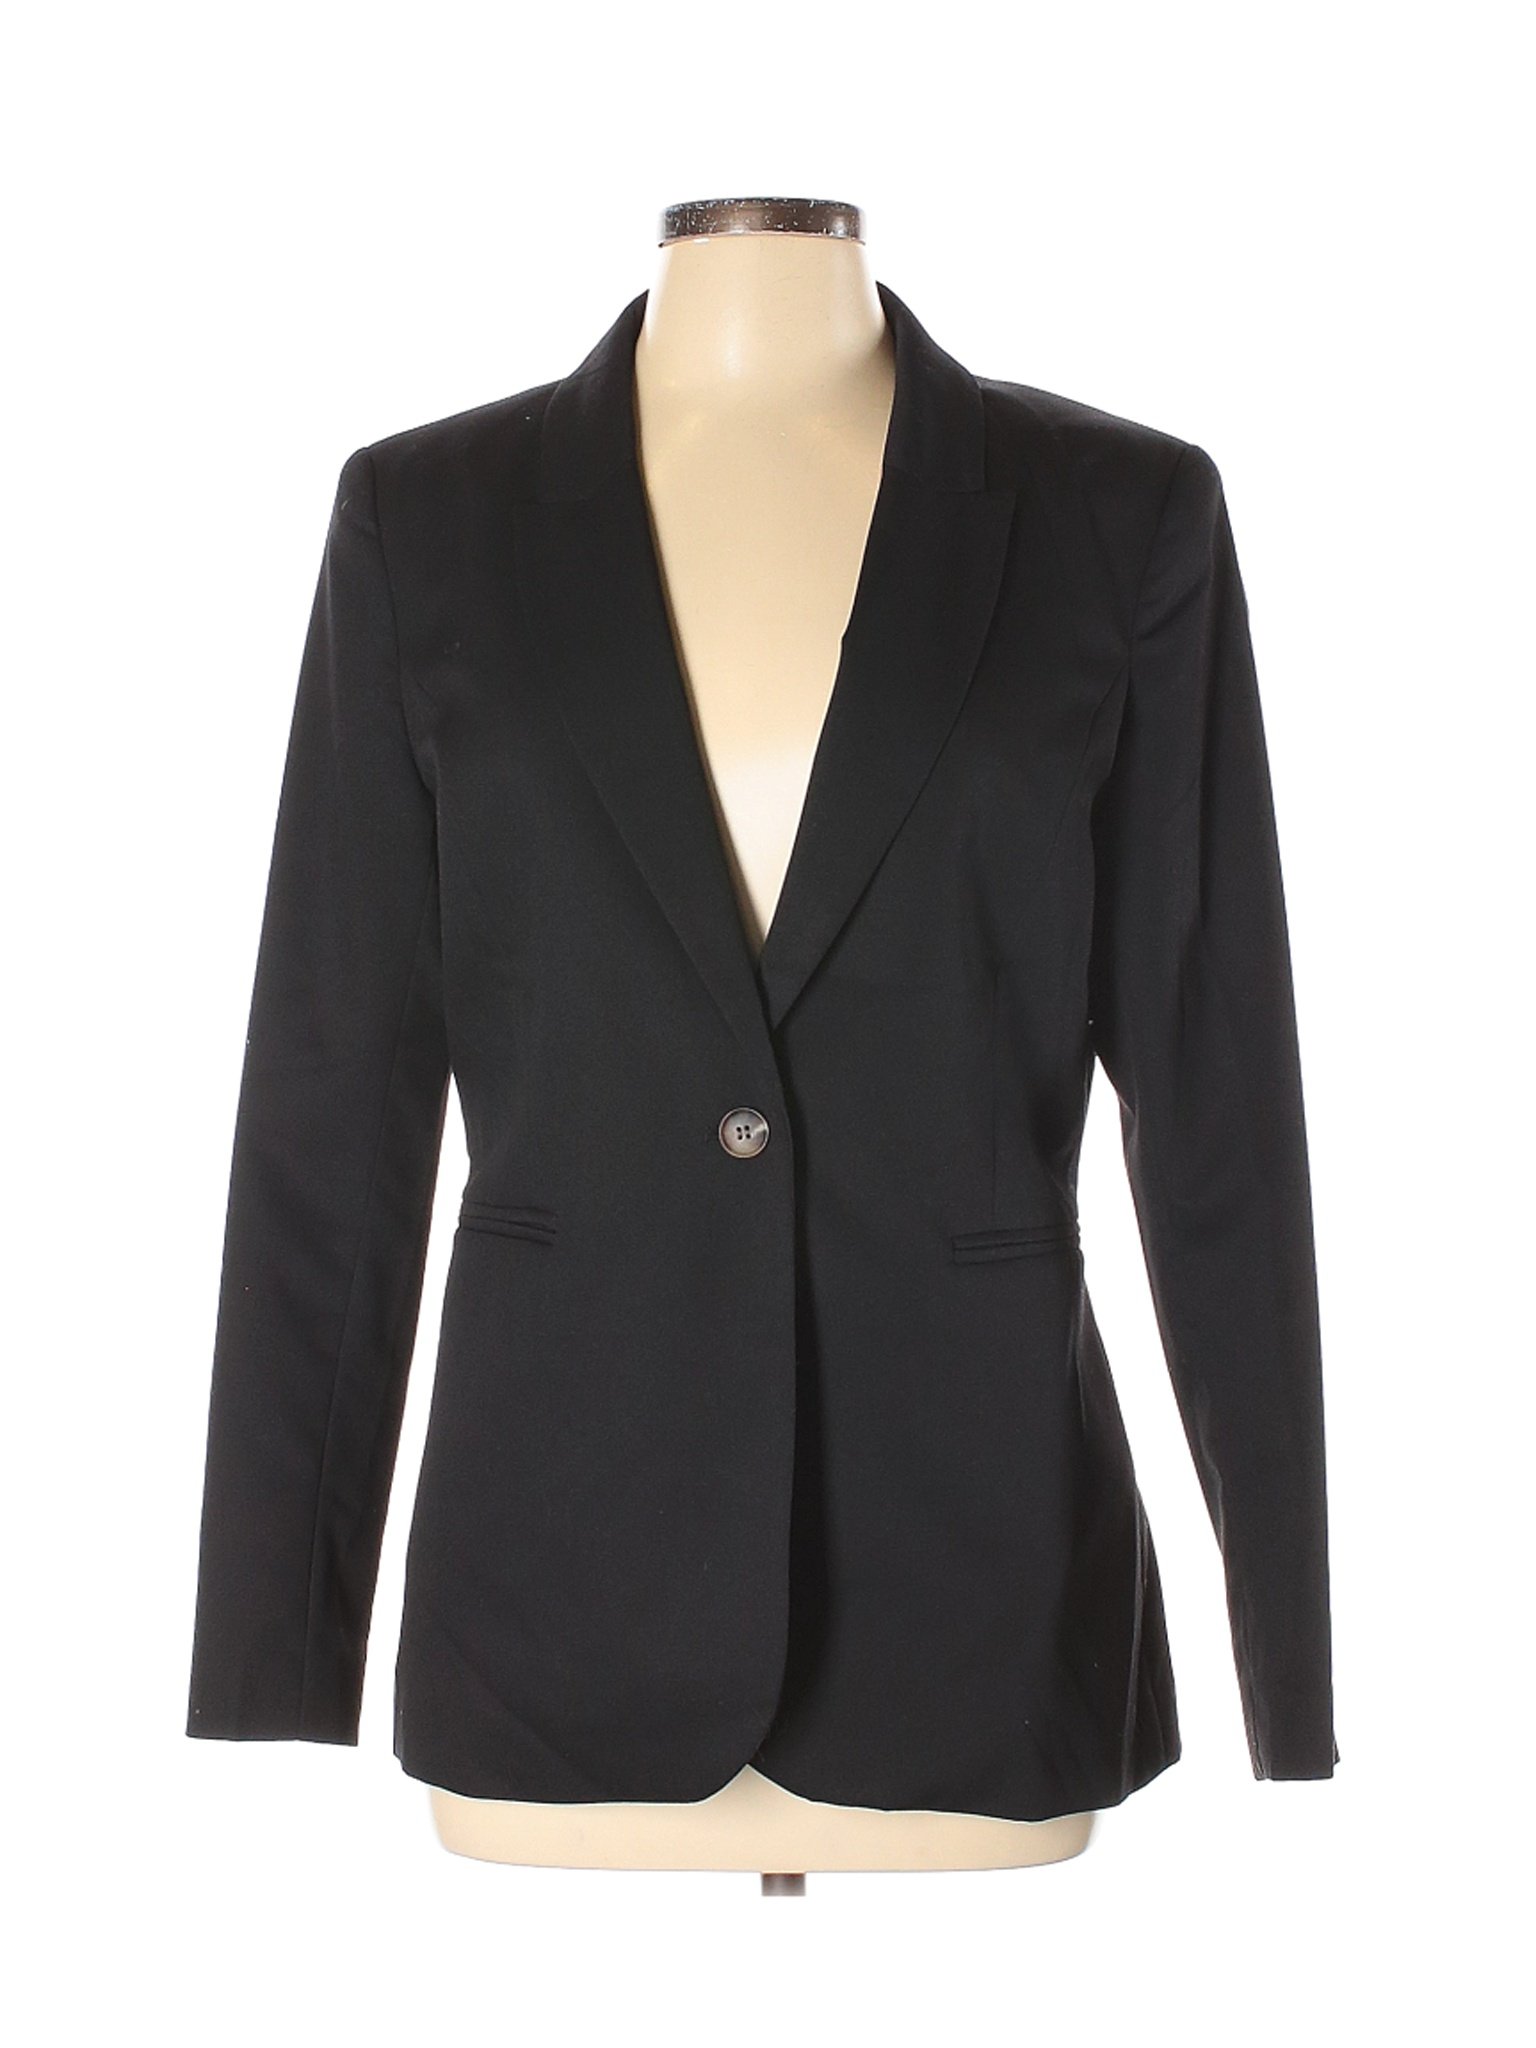 H&M Women Black Blazer 12 | eBay